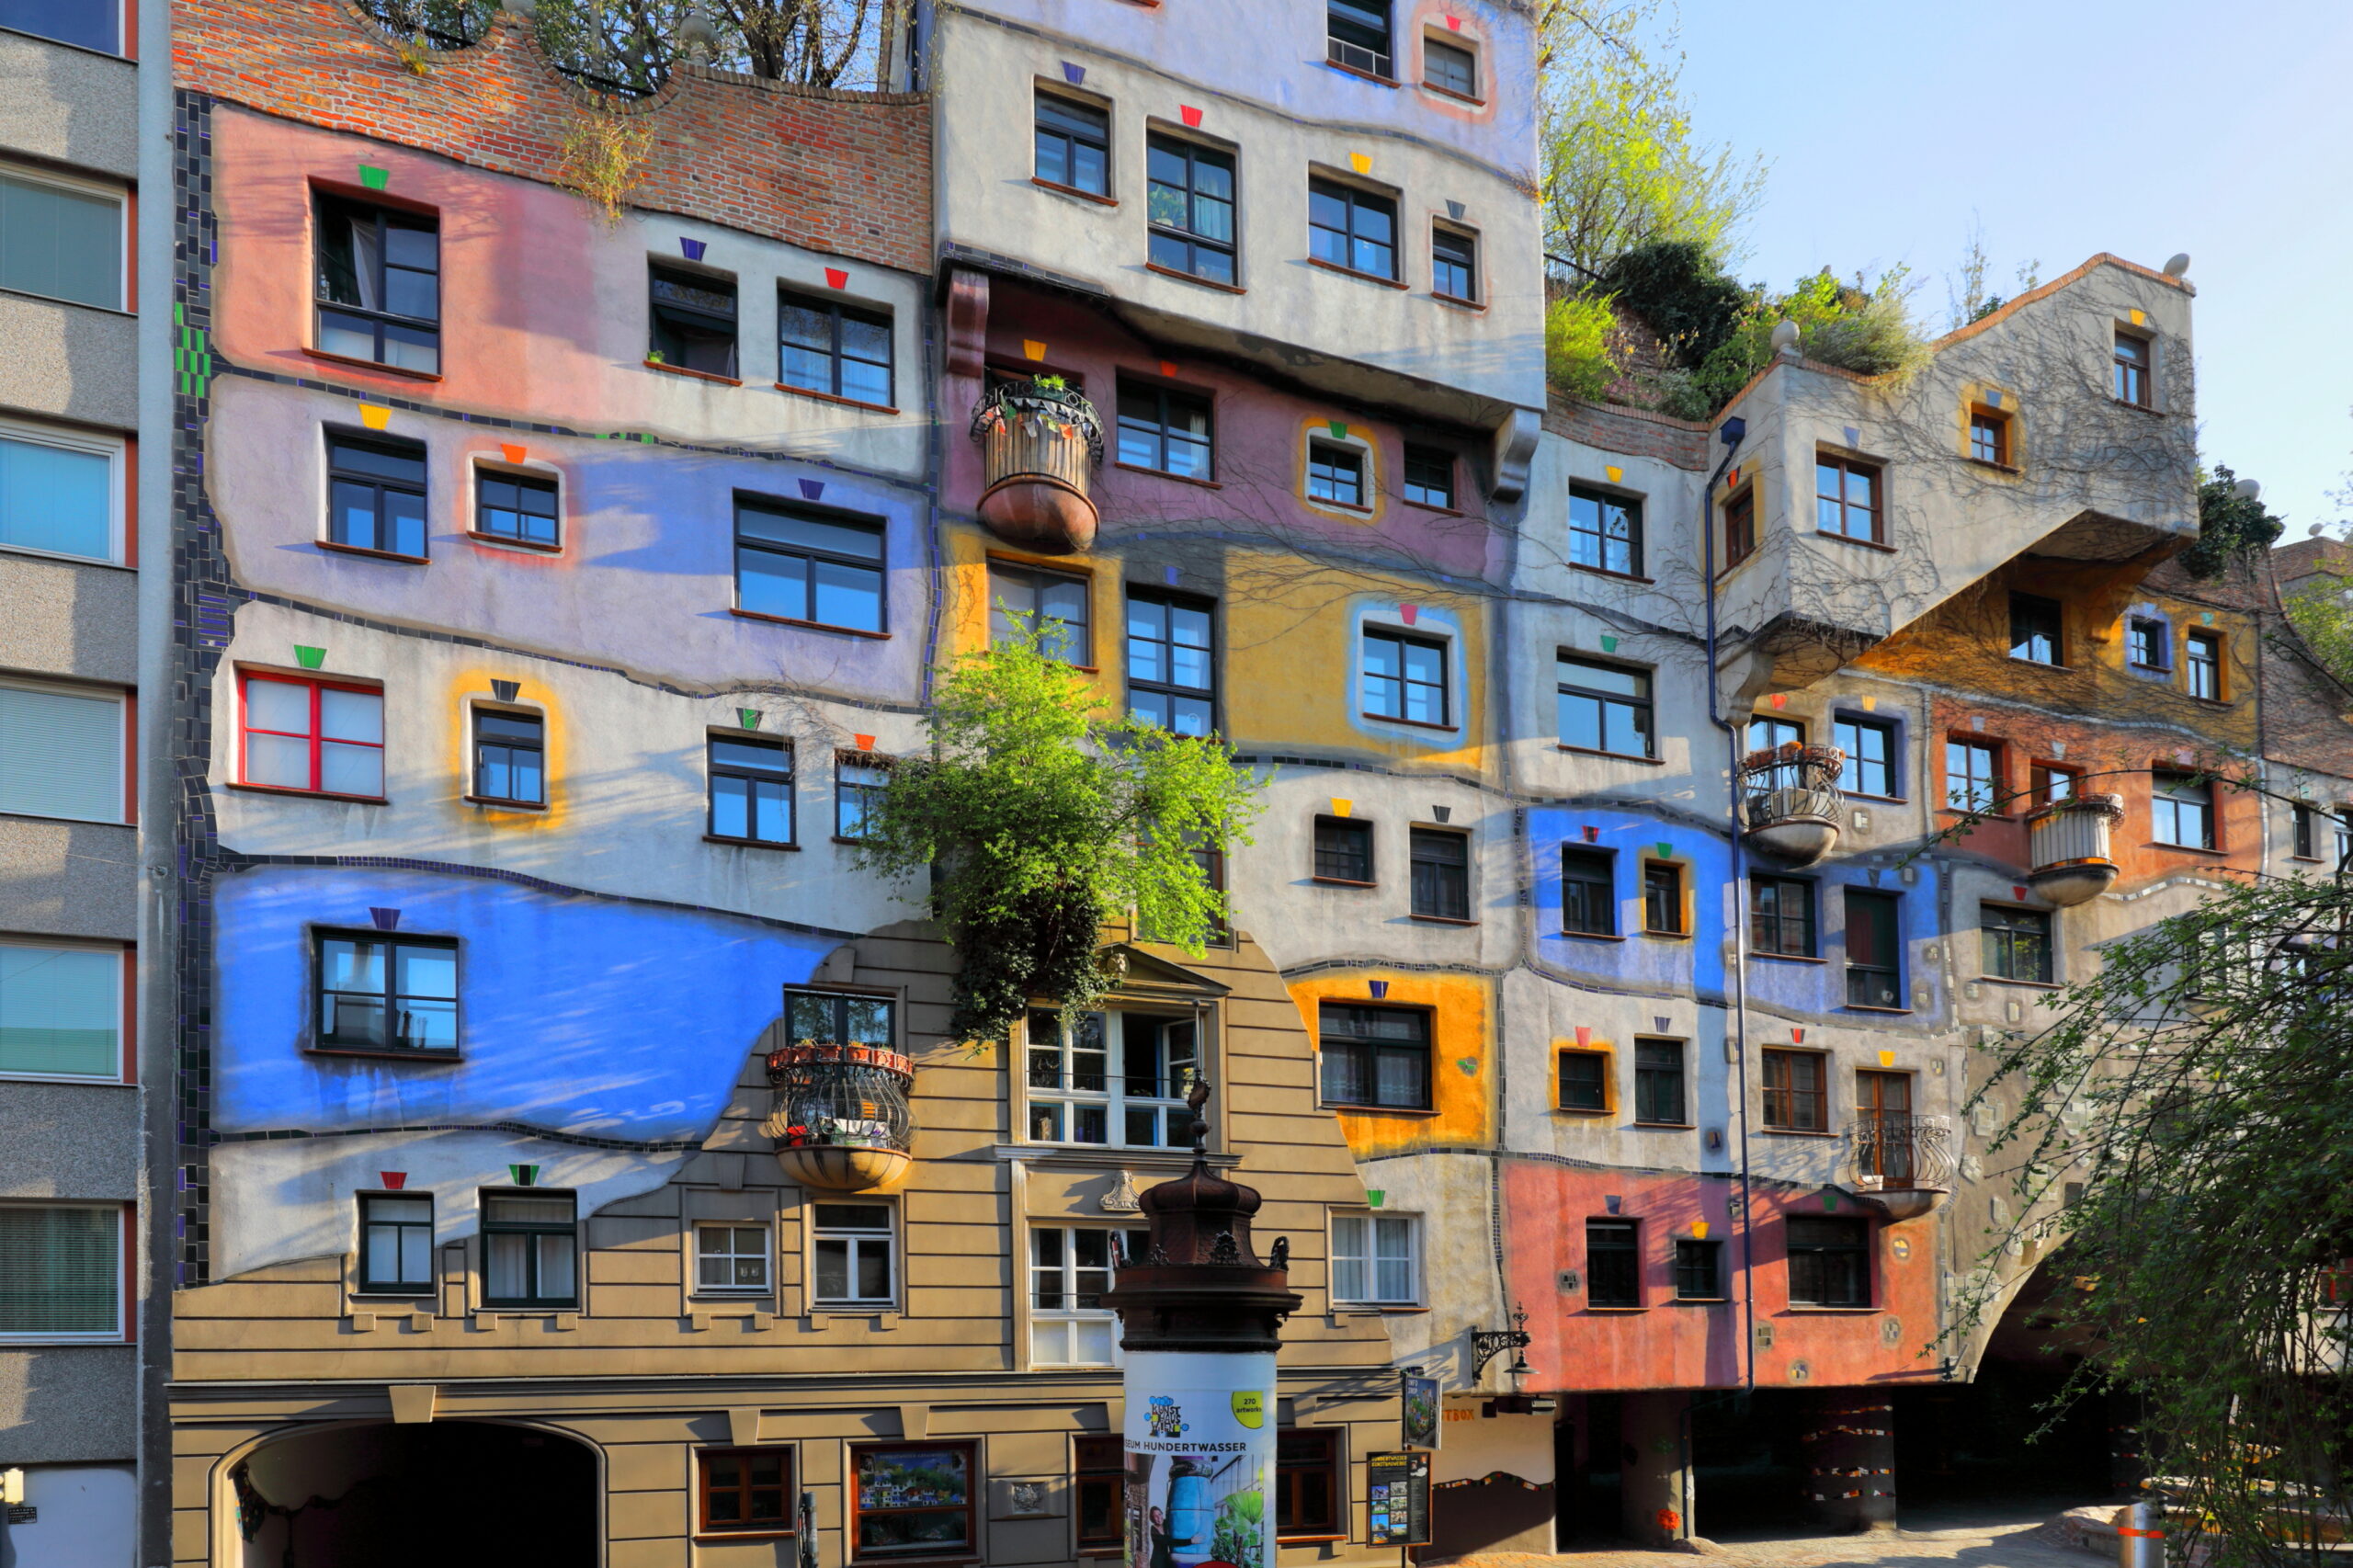 Colorful World of Friedensreich Hundertwasser in 5 Works